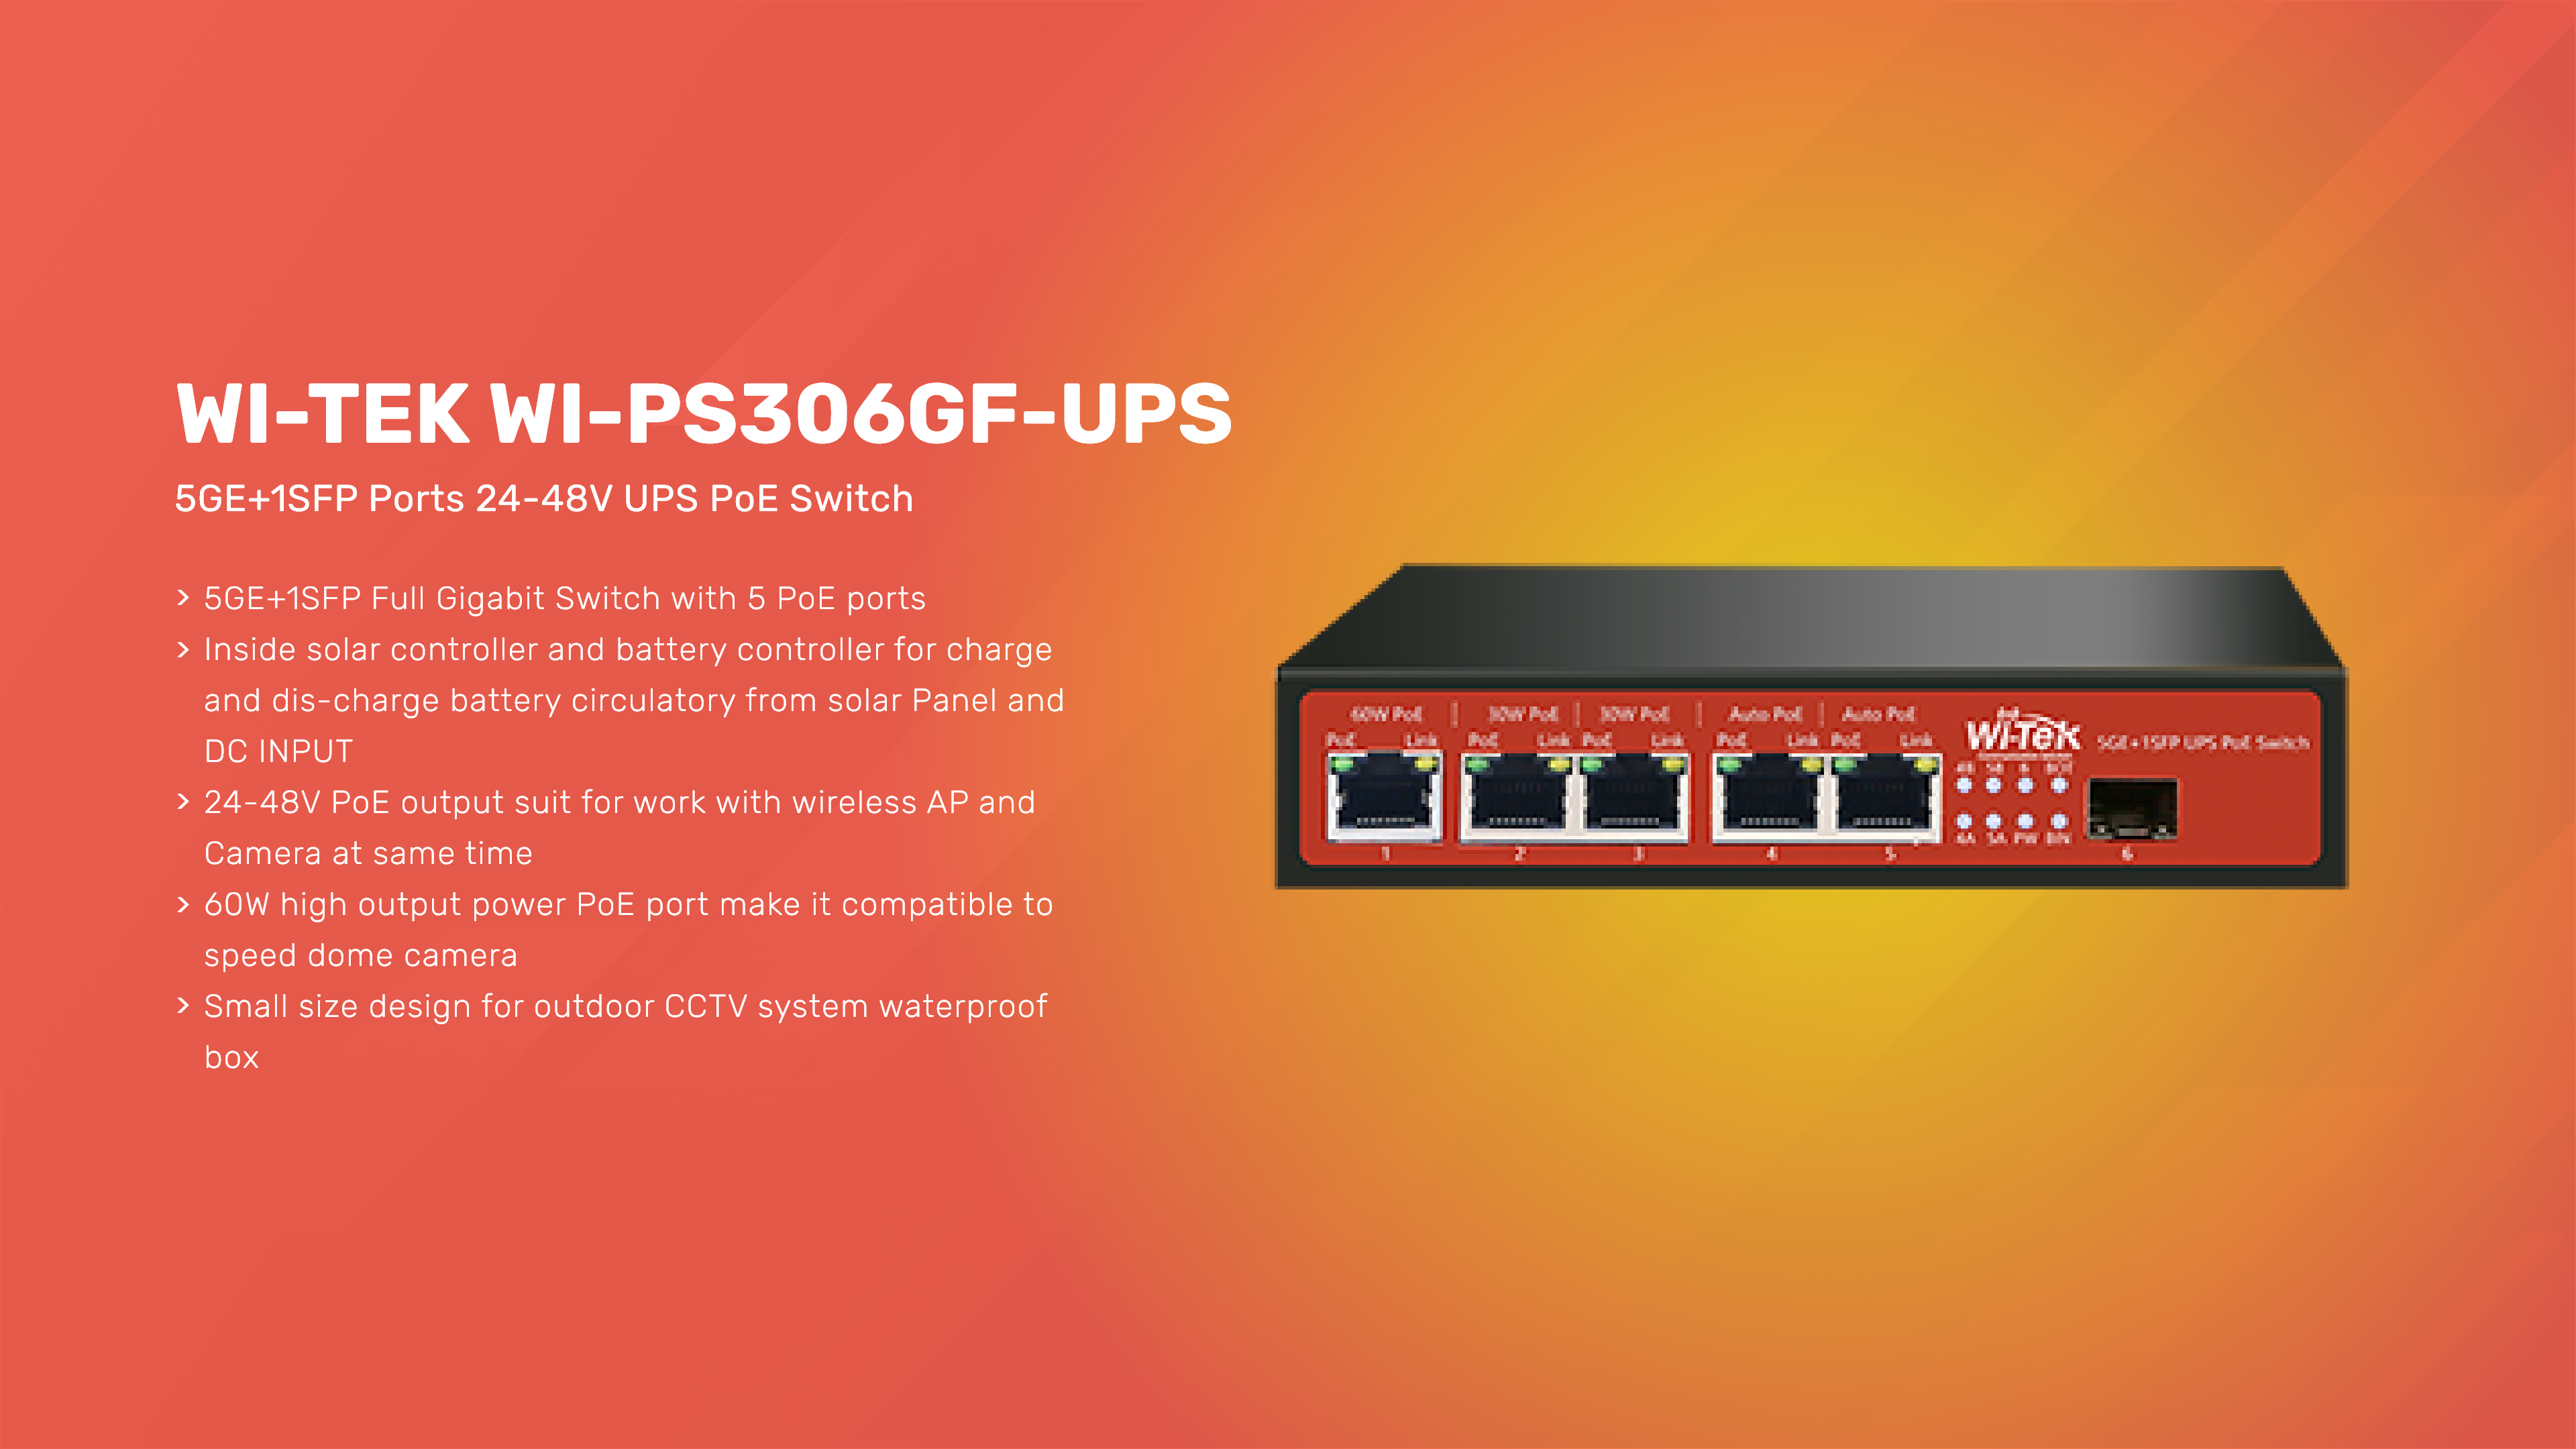 Wi-tek WI-PS306GF-UPS 5GE+1SFP Ports PoE Switch